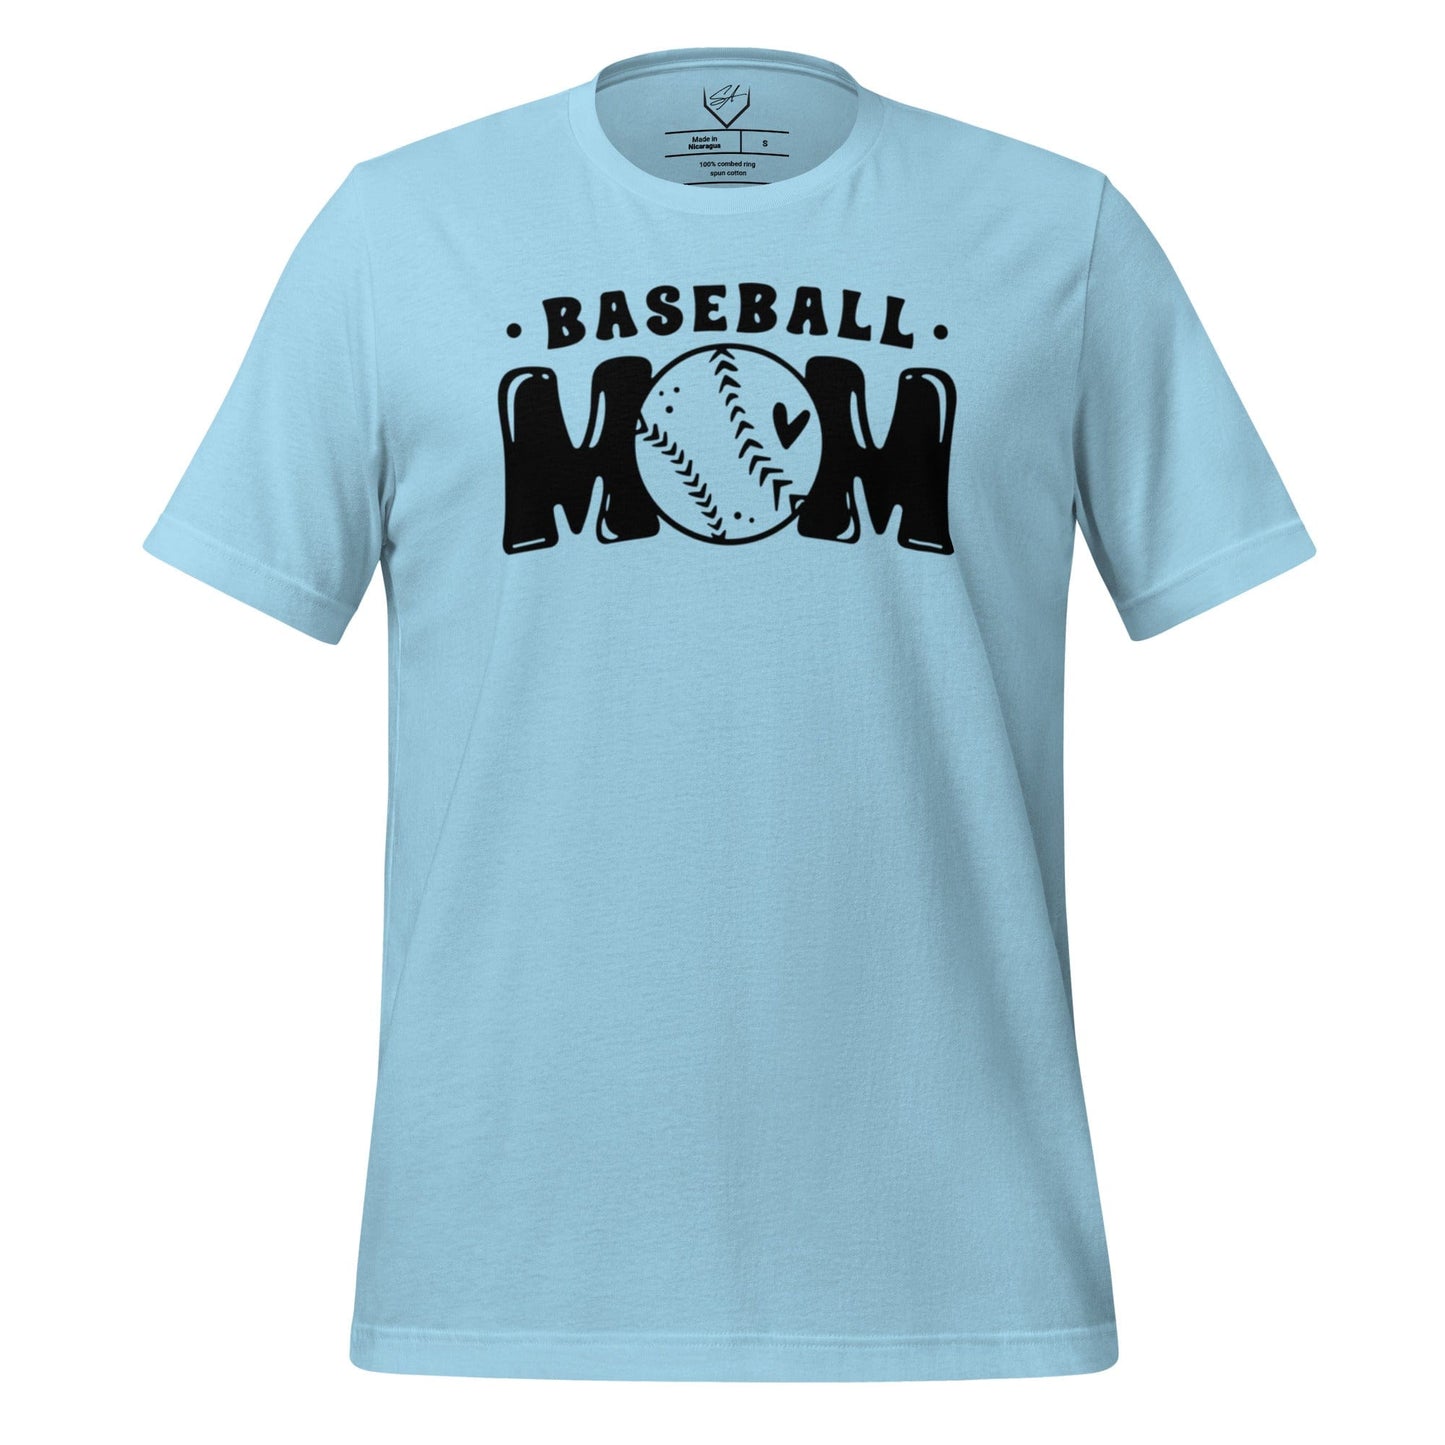 Baseball Mom - Adult Tee